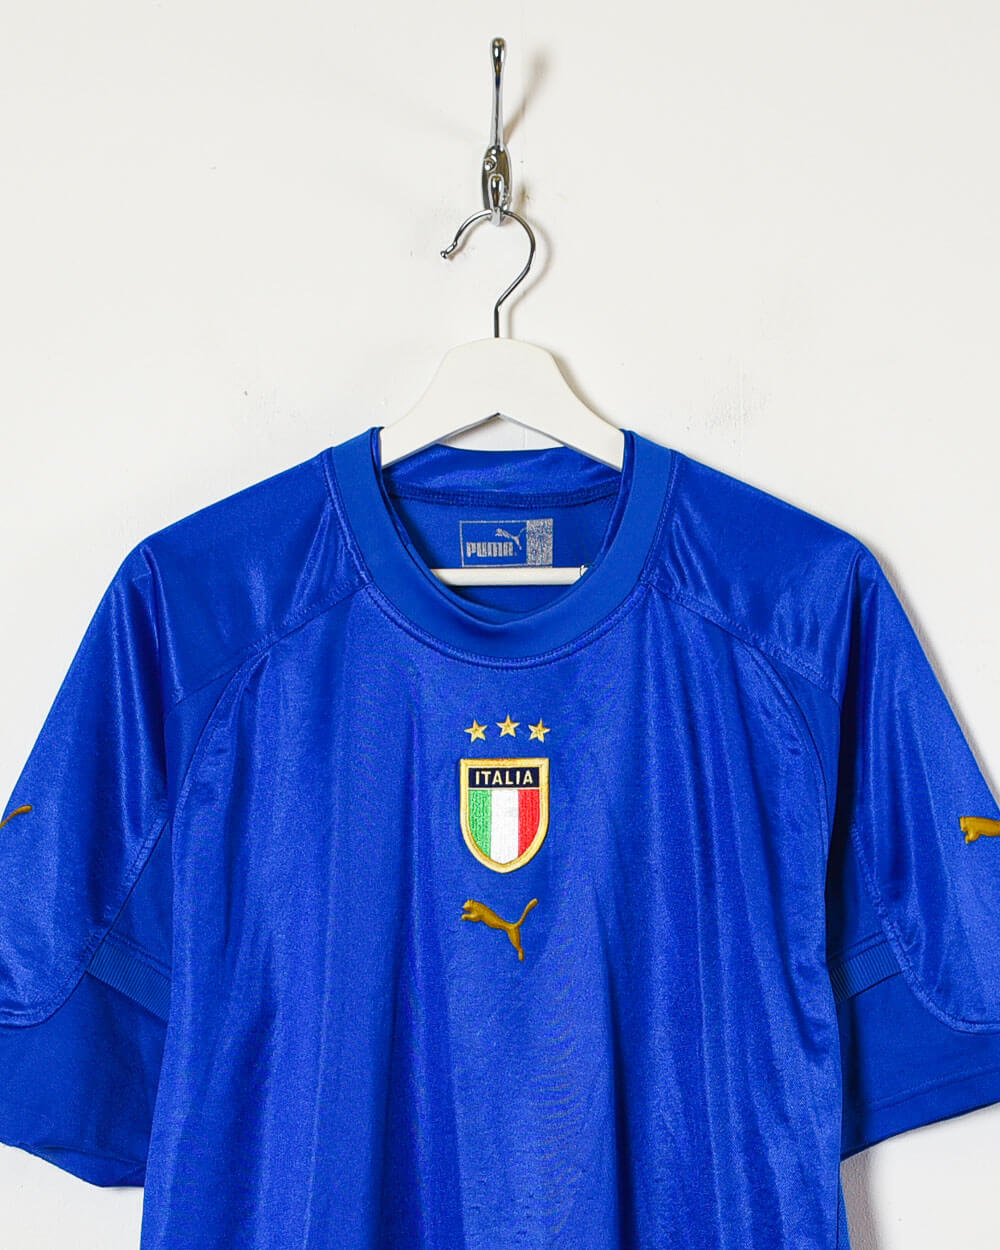 Blue Puma 2004/05 Italy Home Shirt - Large